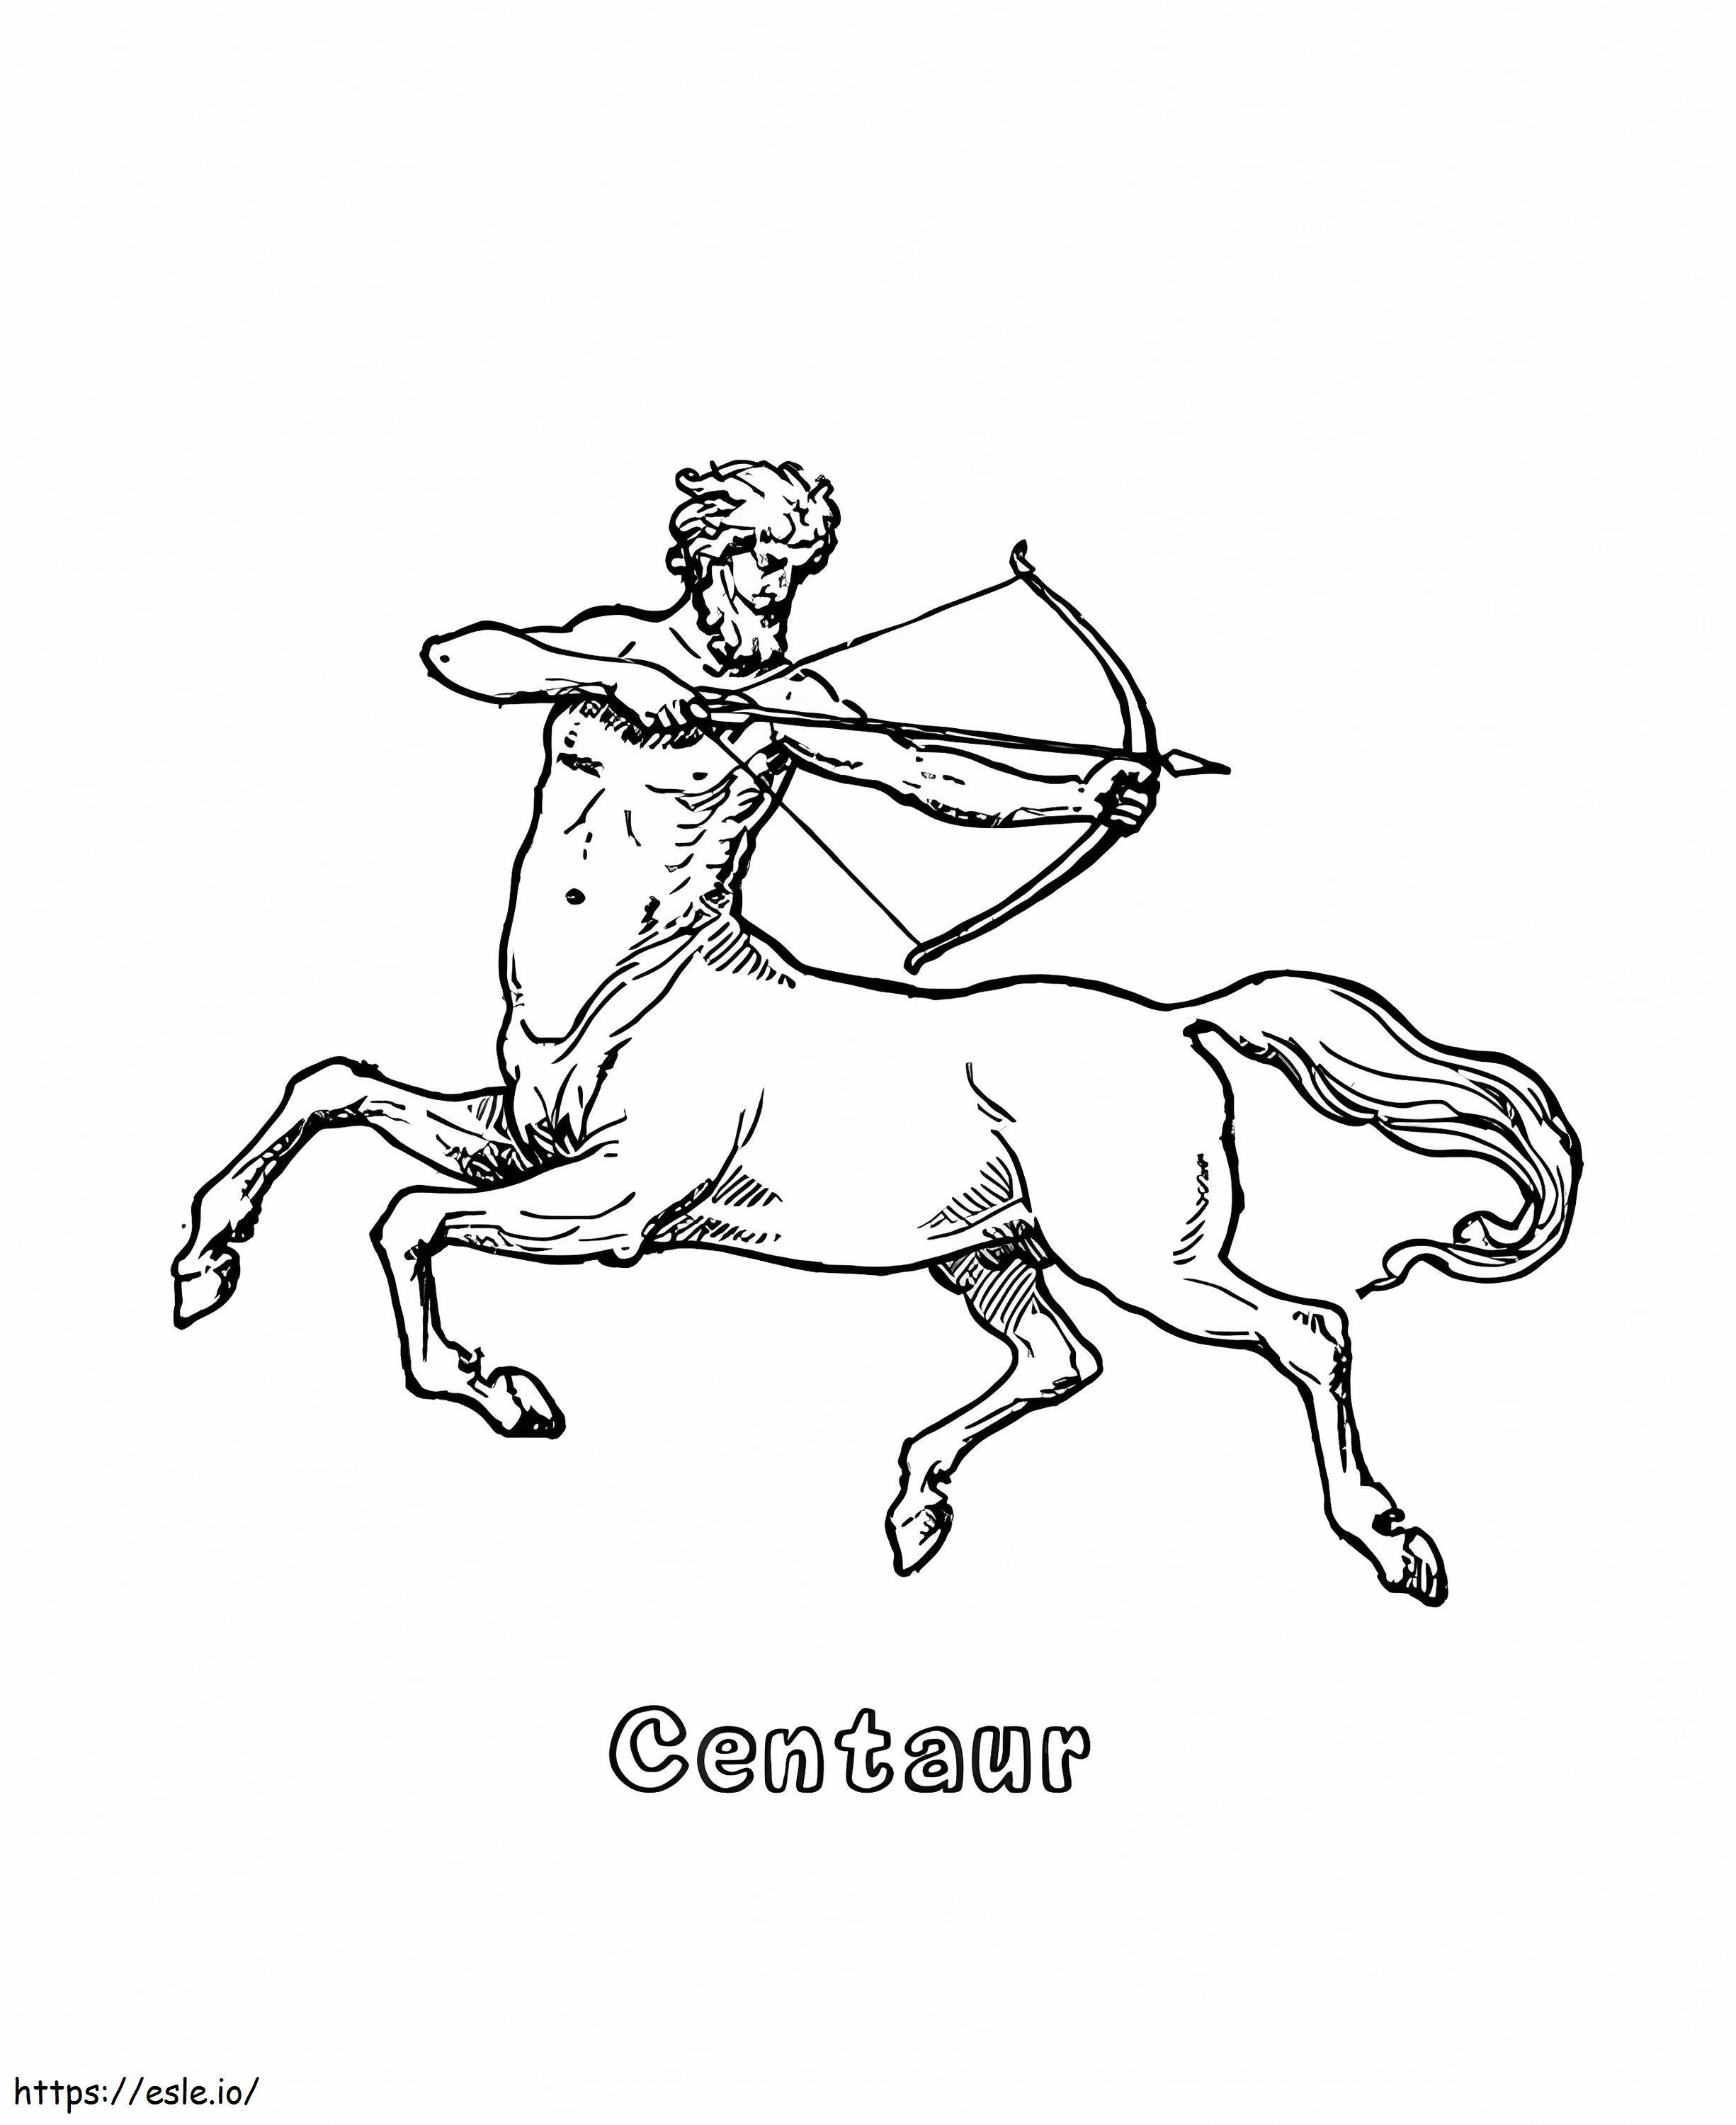 Printable Centaur coloring page